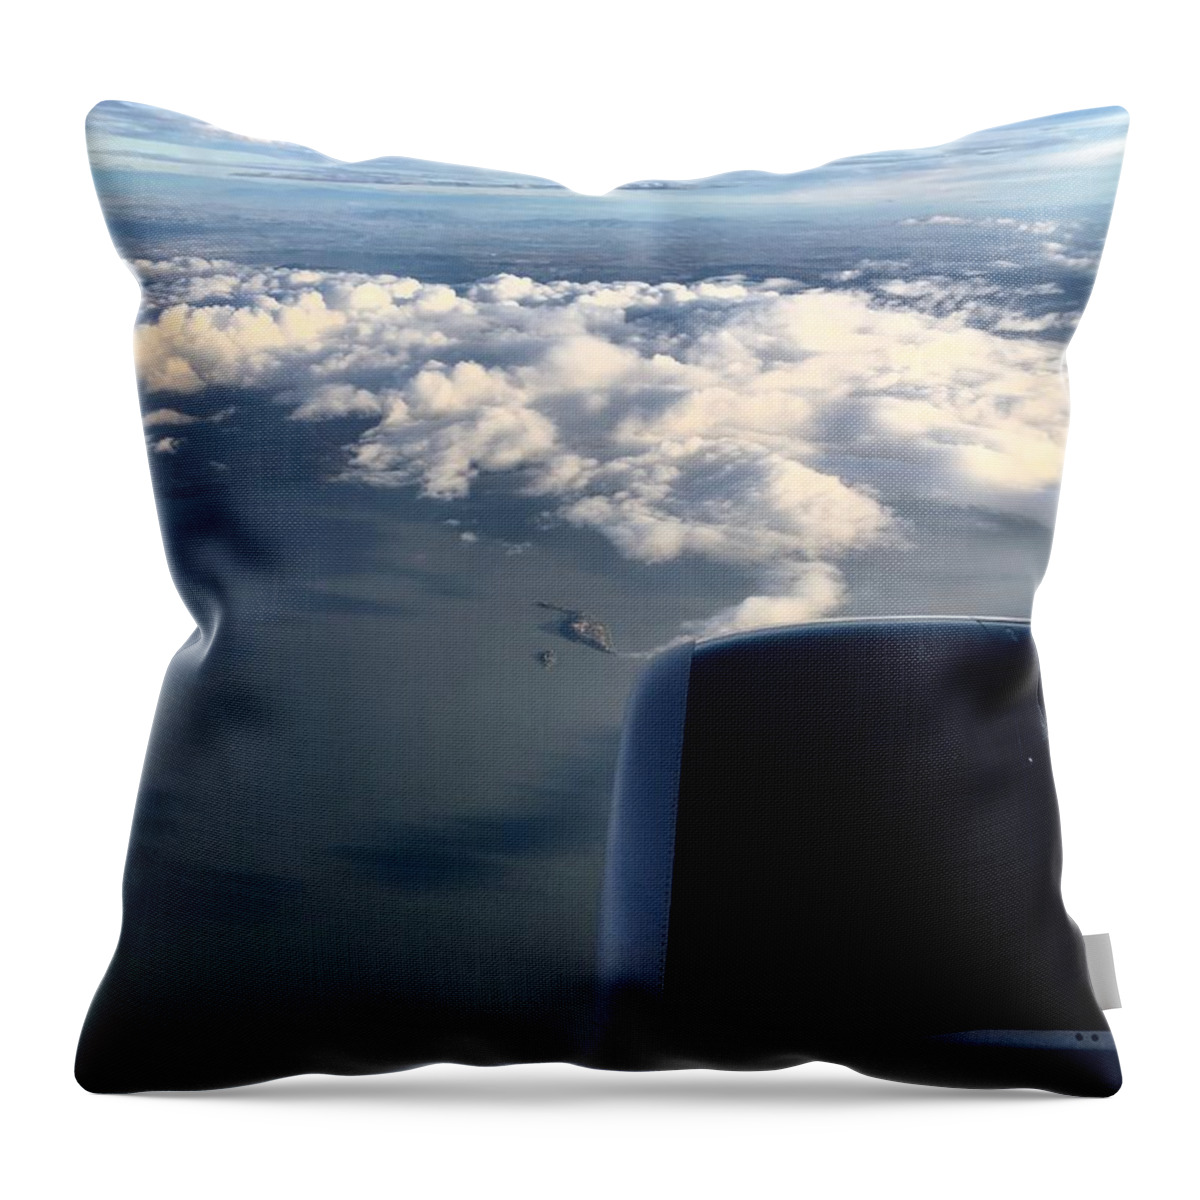 Chapala Throw Pillow featuring the photograph Lago de Chapala by Aurora Bautista